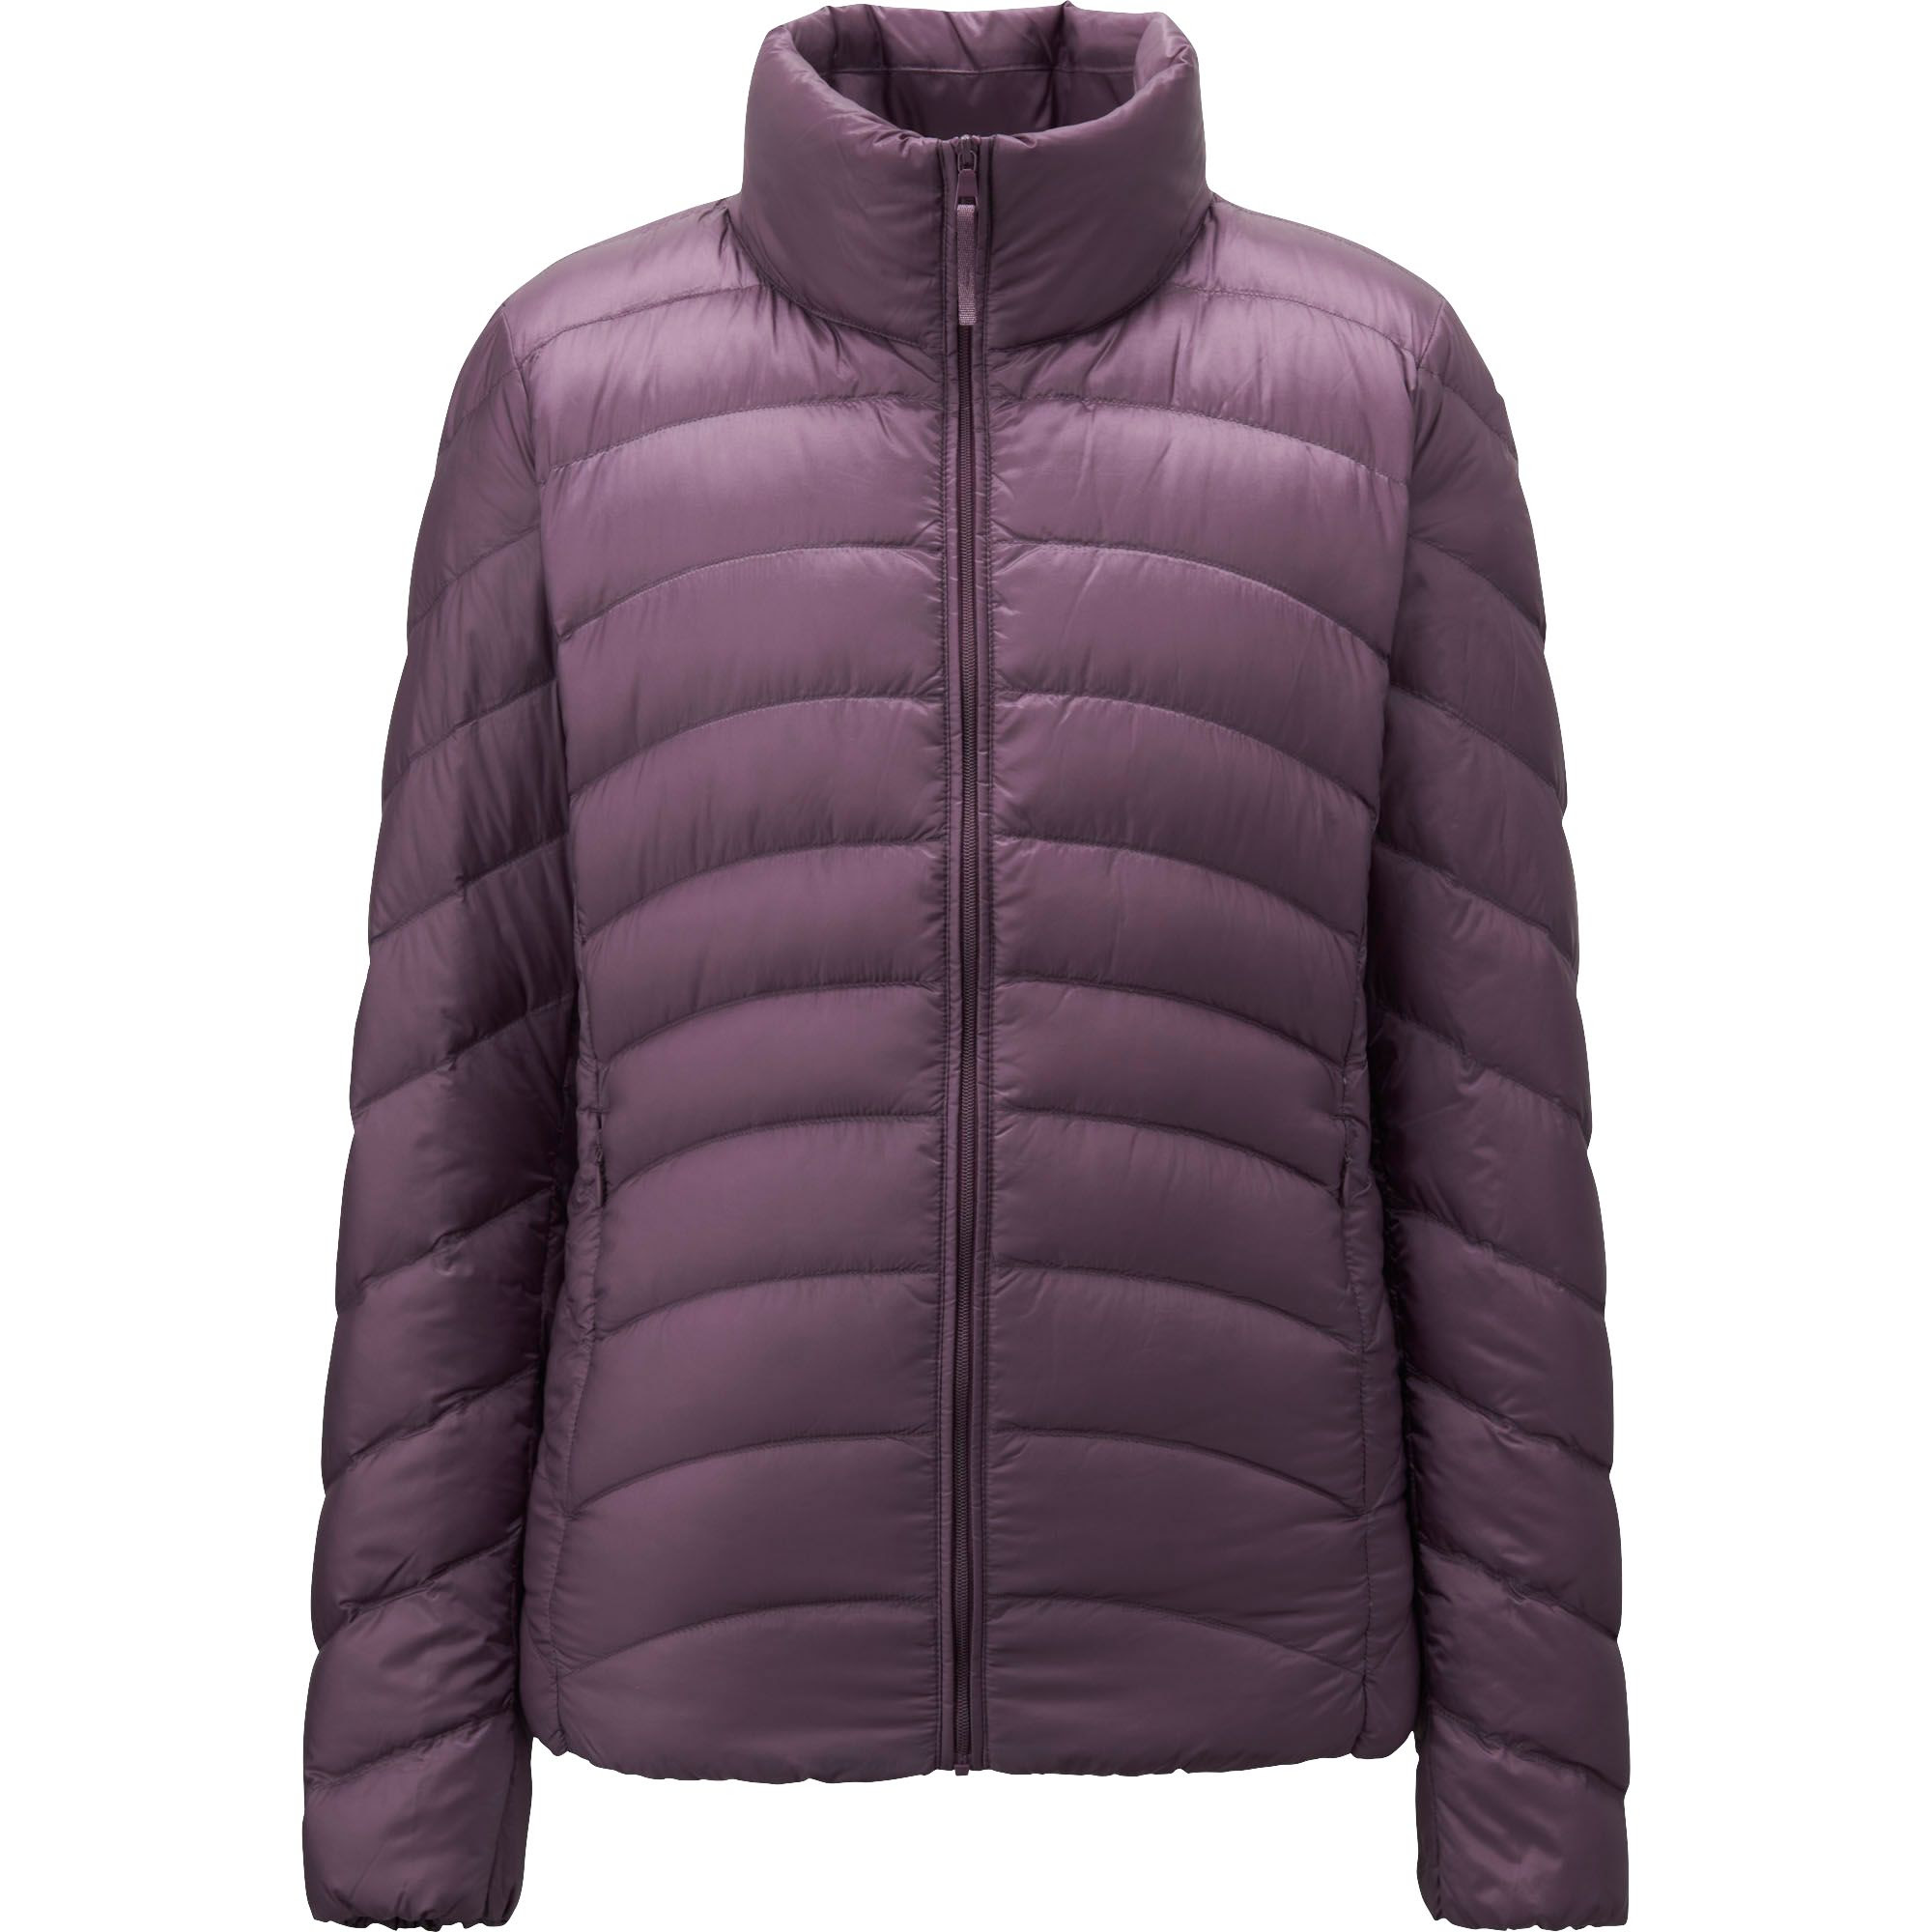 Uniqlo Coat / Discounts on Uniqlo Winter Jackets / Shop our women's ...